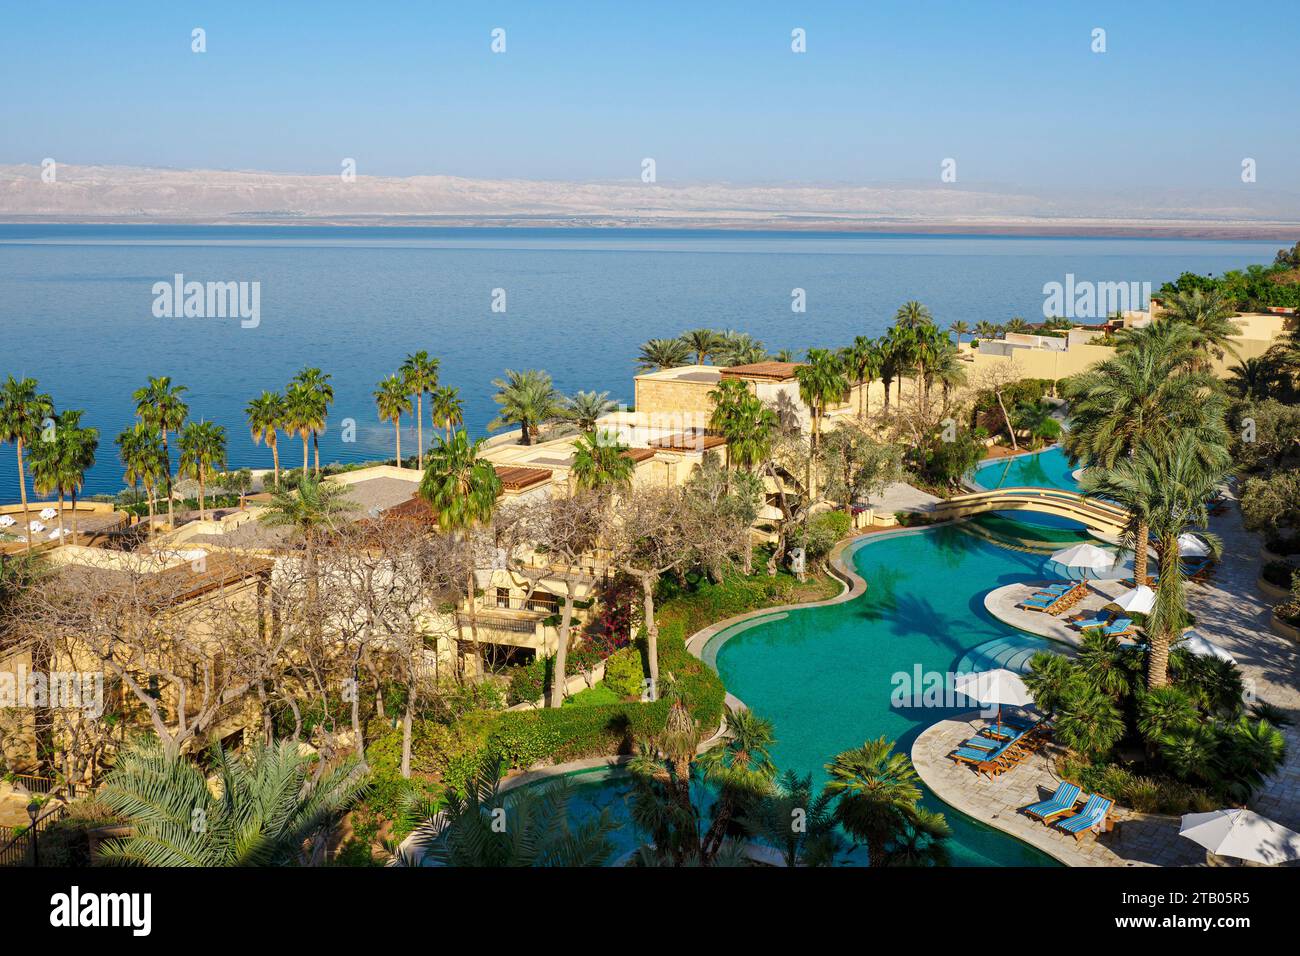 Kempinski Hotel Ishtar, a 5-star luxury resort by the Dead Sea inspired by the Hanging Gardens of Babylon, Jordan. Stock Photo